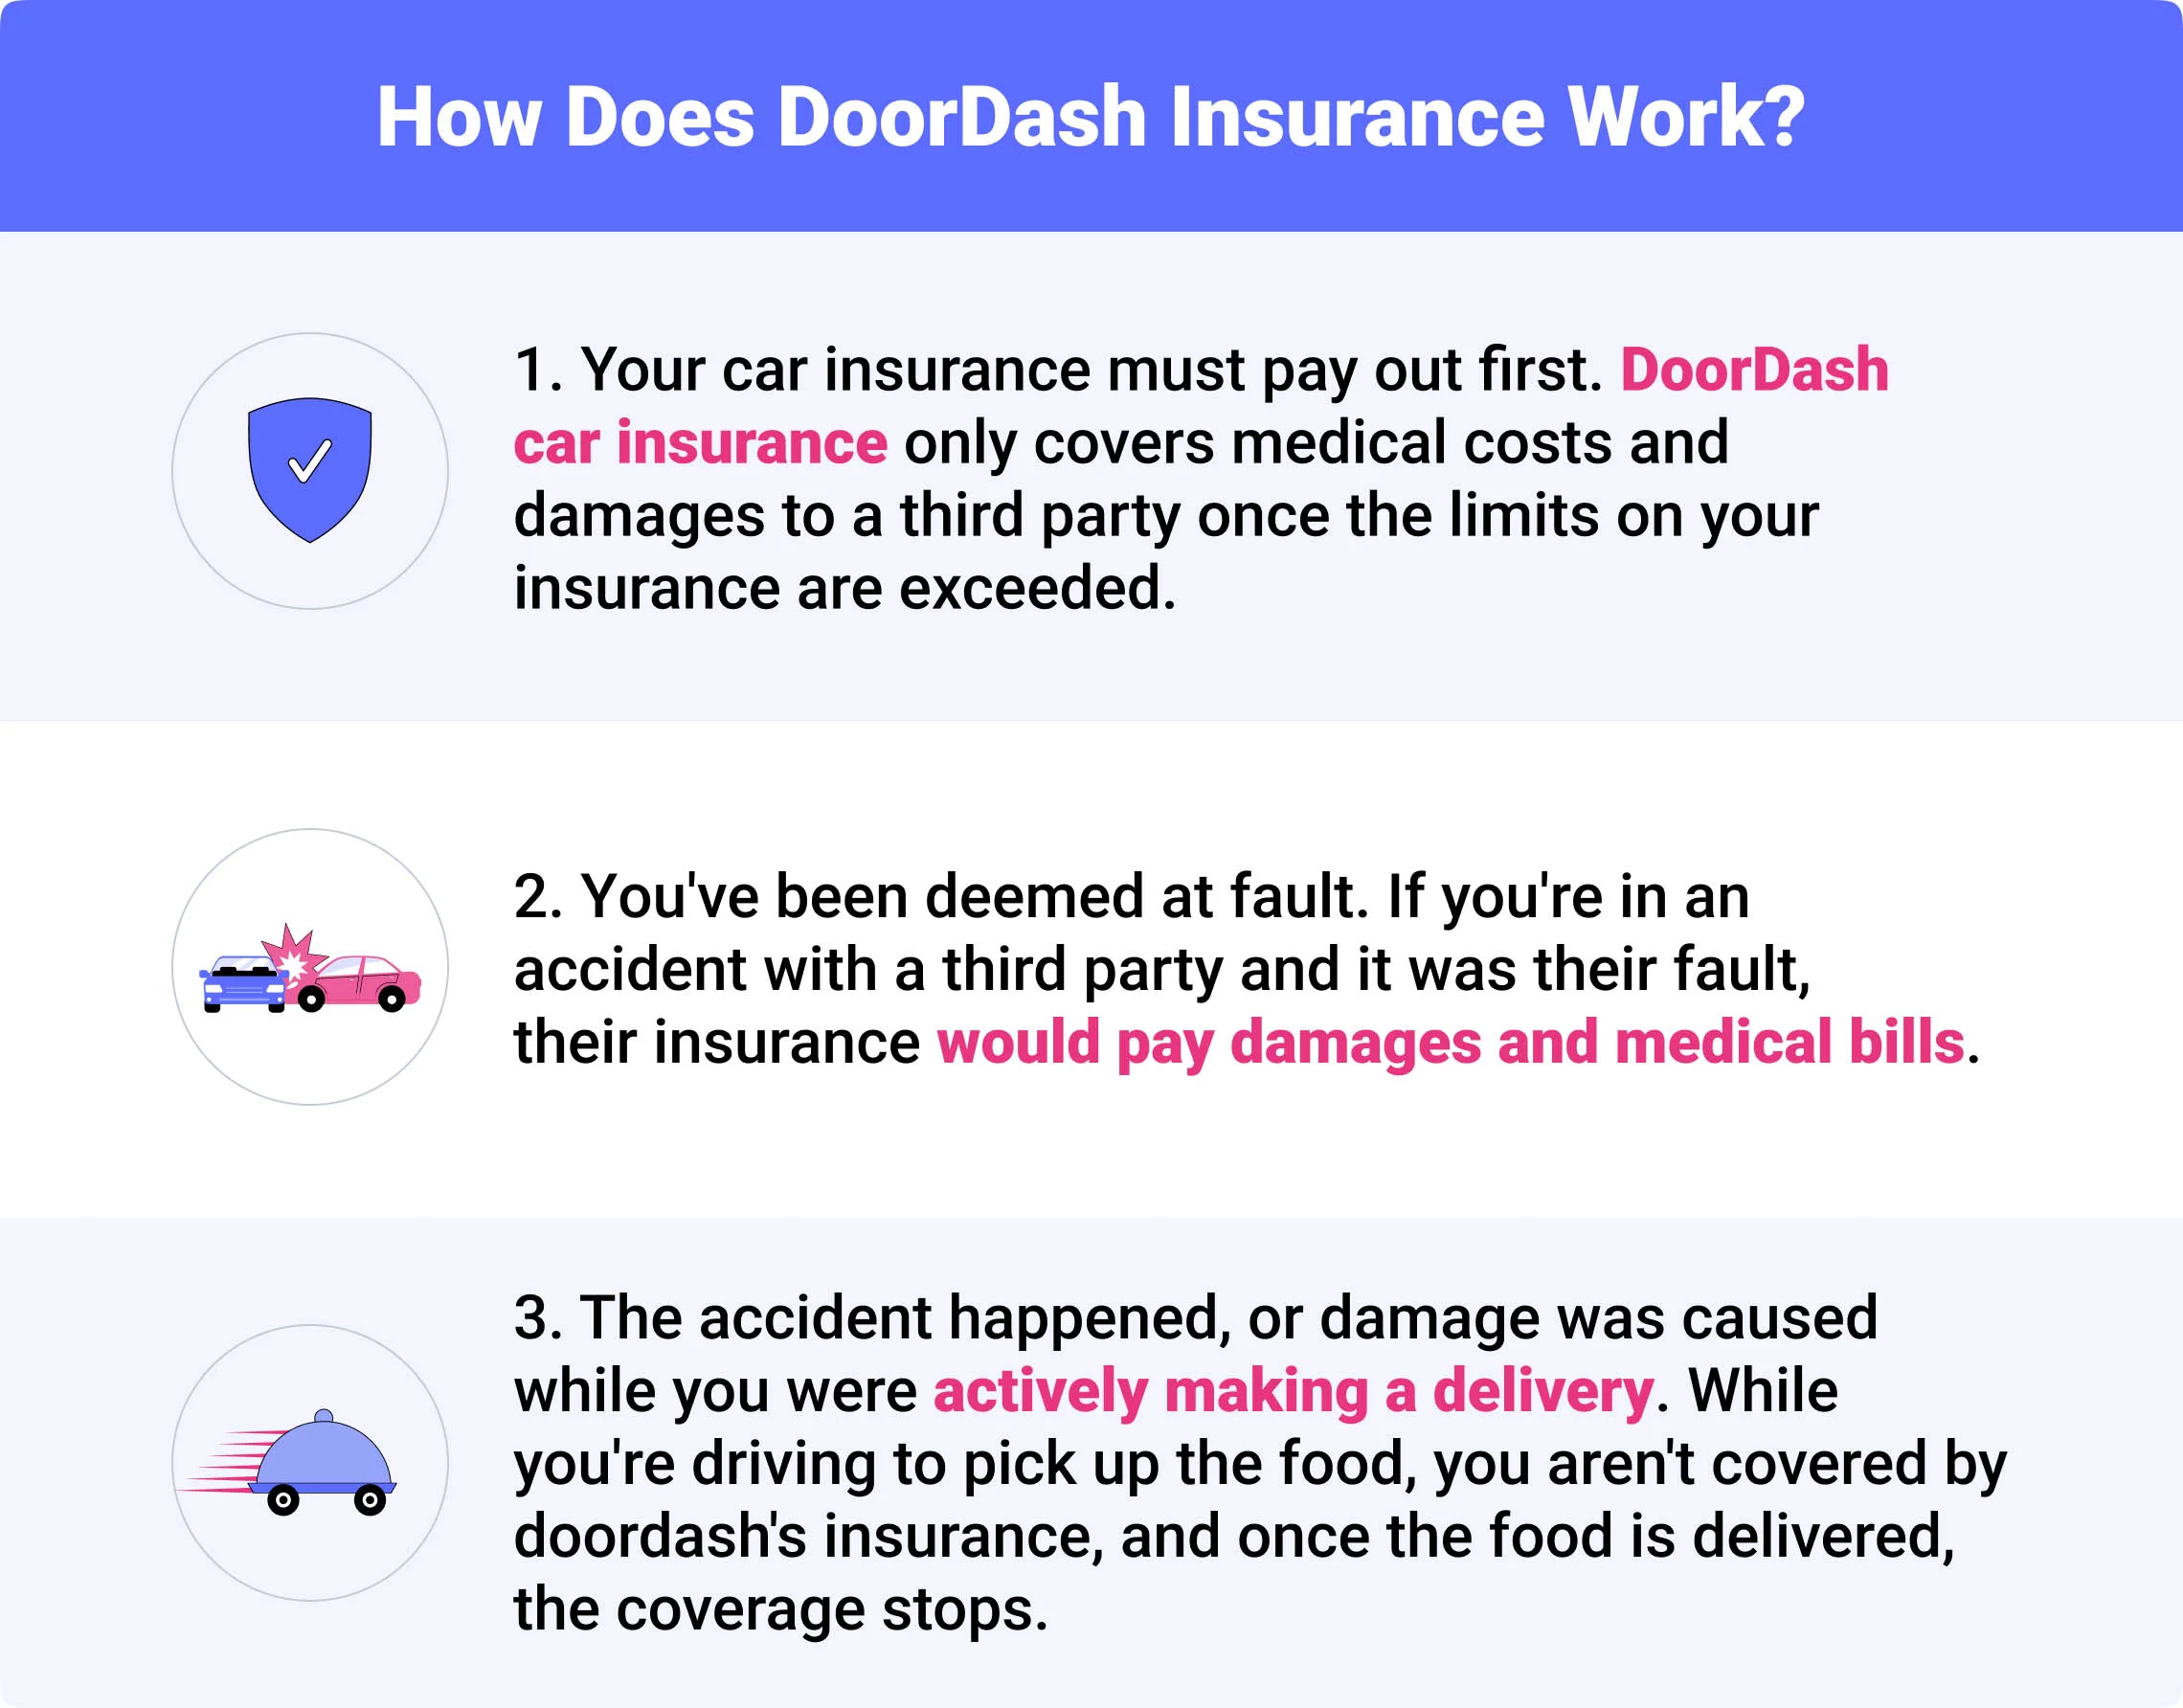 how does DoorDash insurnace work